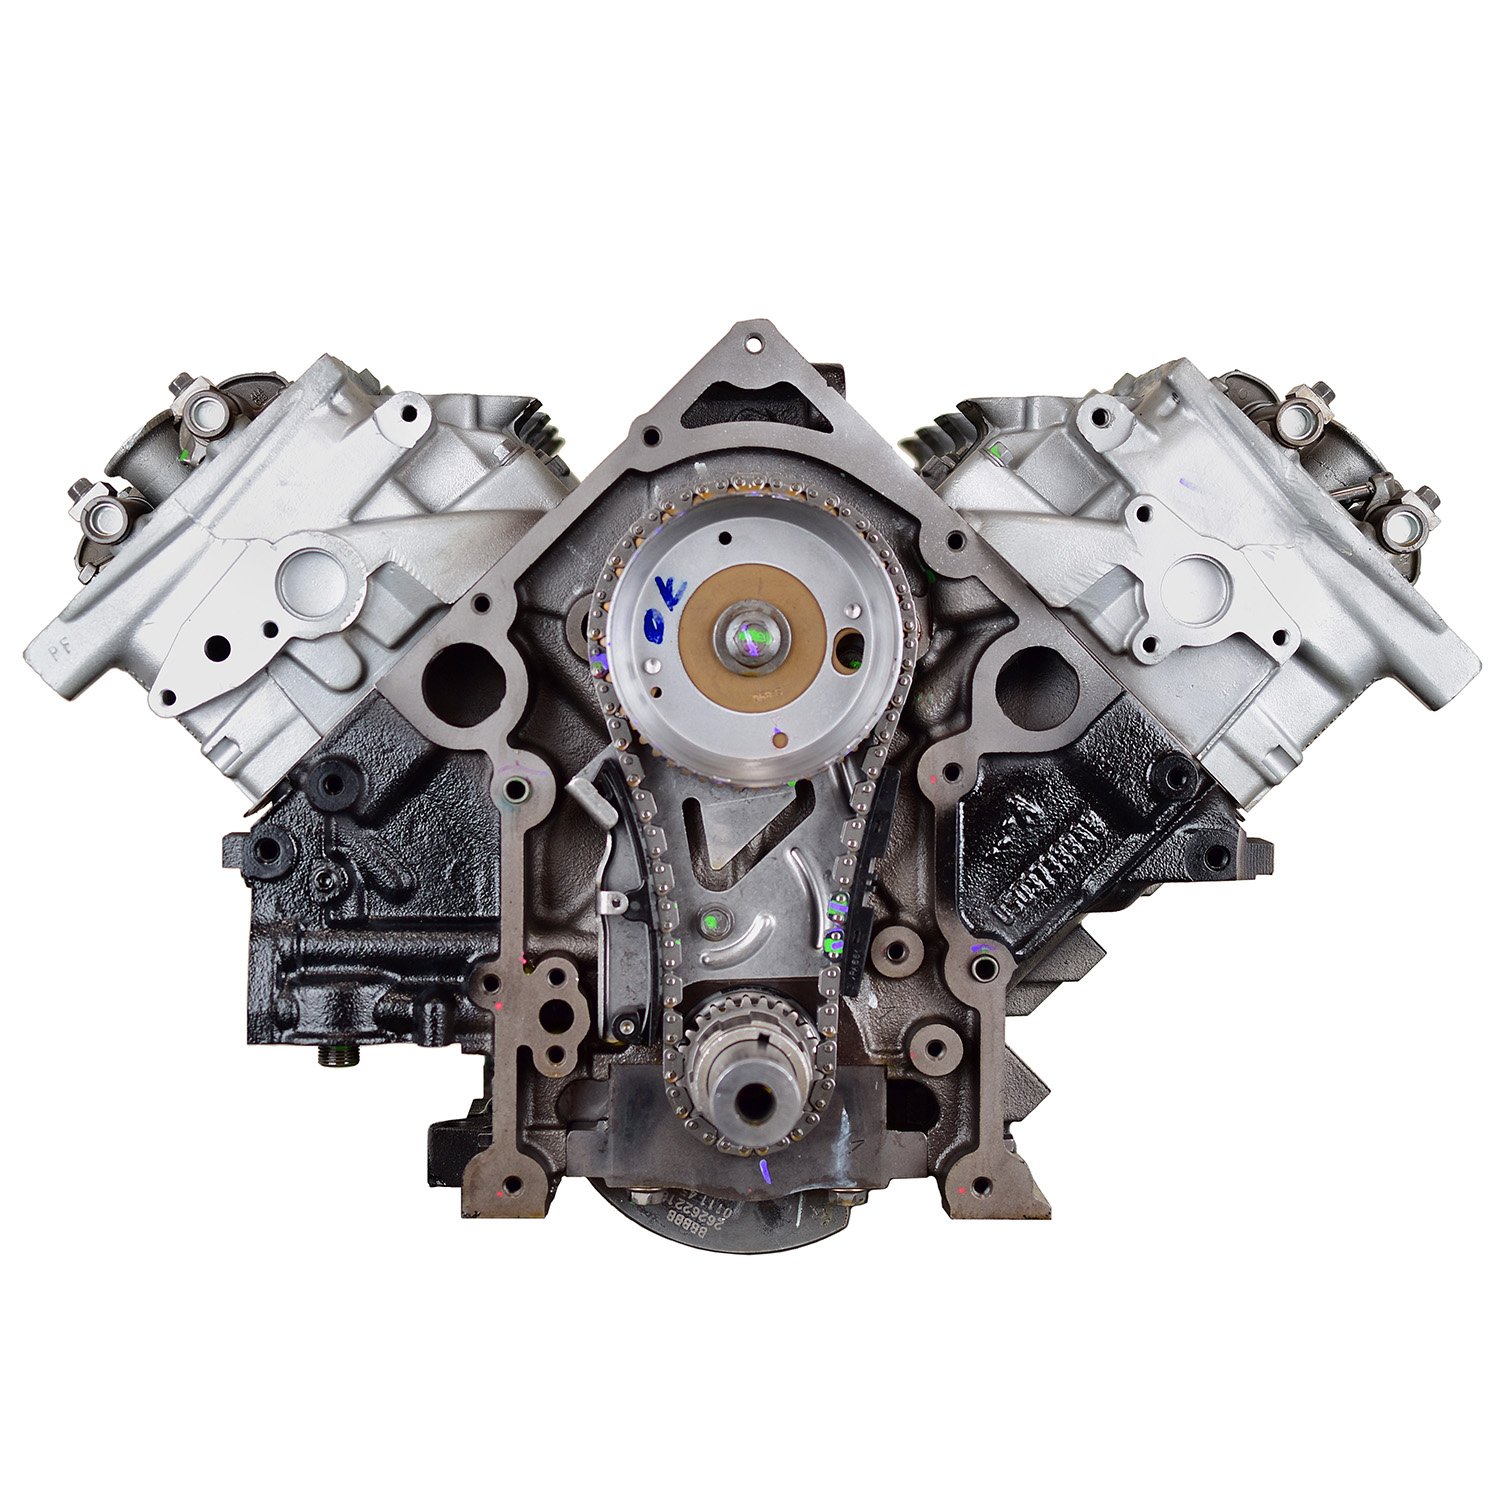 DDM1 Remanufactured Crate Engine for 2006-2010 Chrysler Models with 6.1L